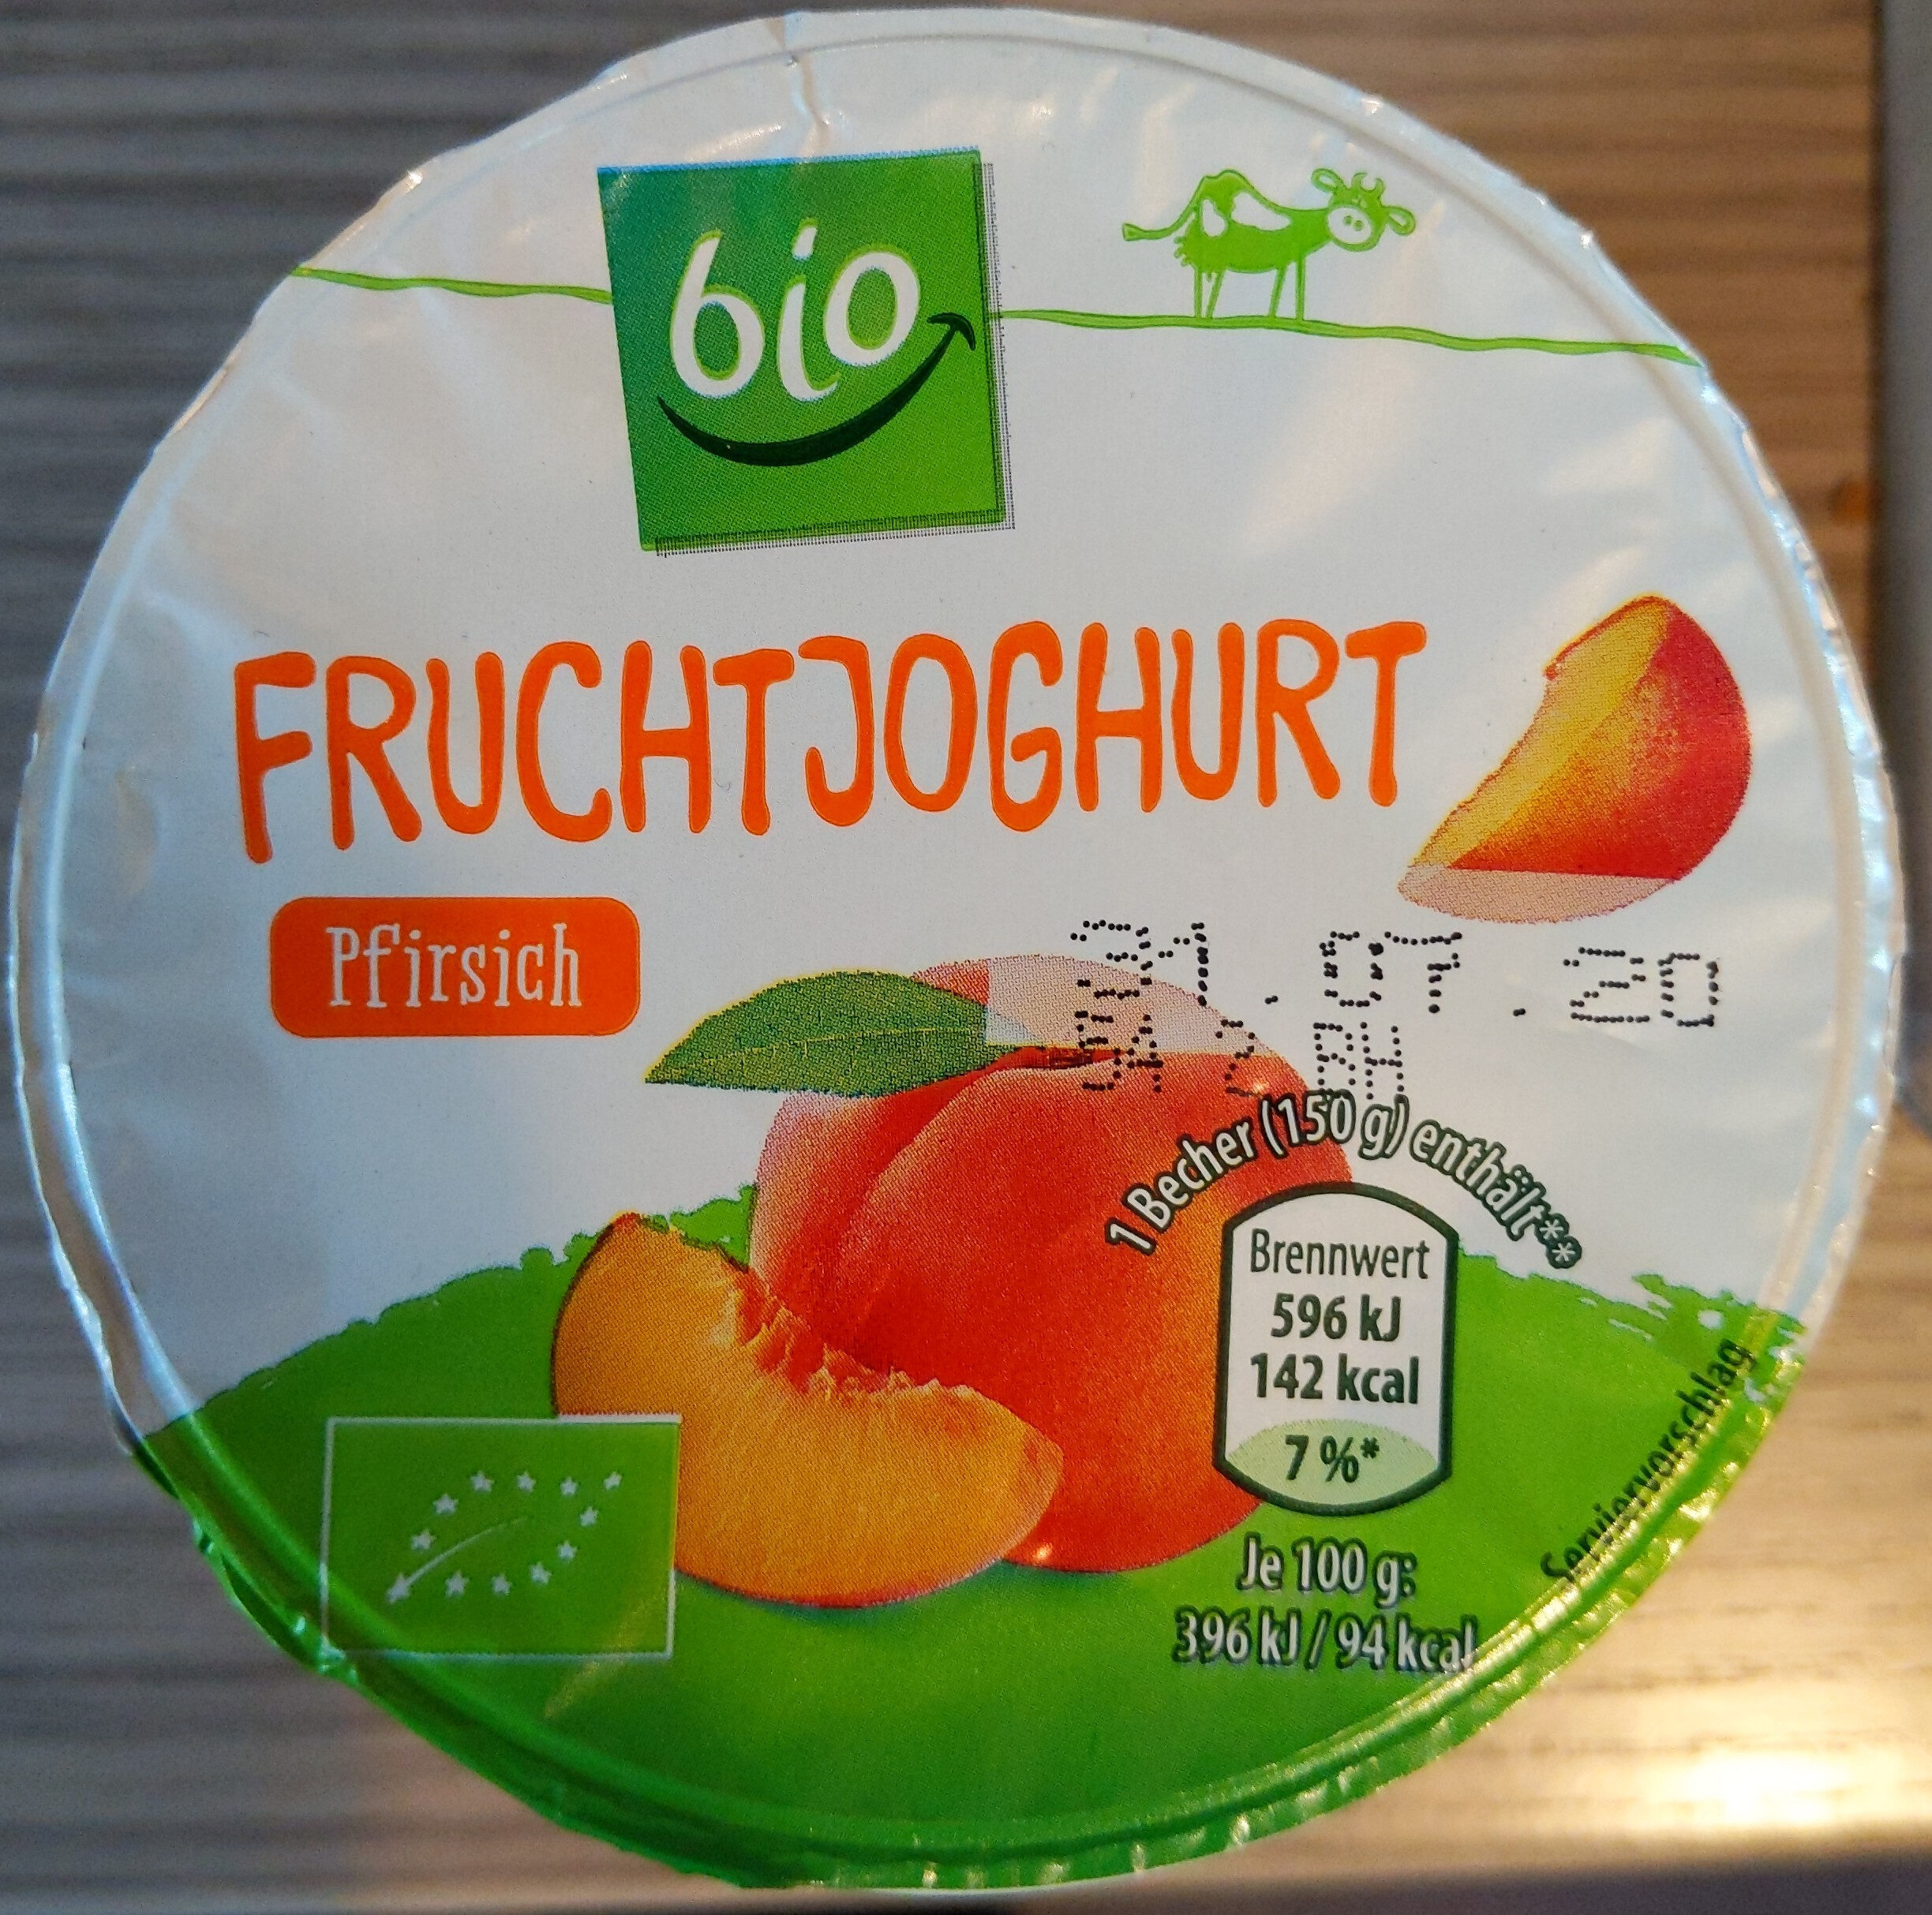 Fruchtjoghurt Pfirsich - Producto - de